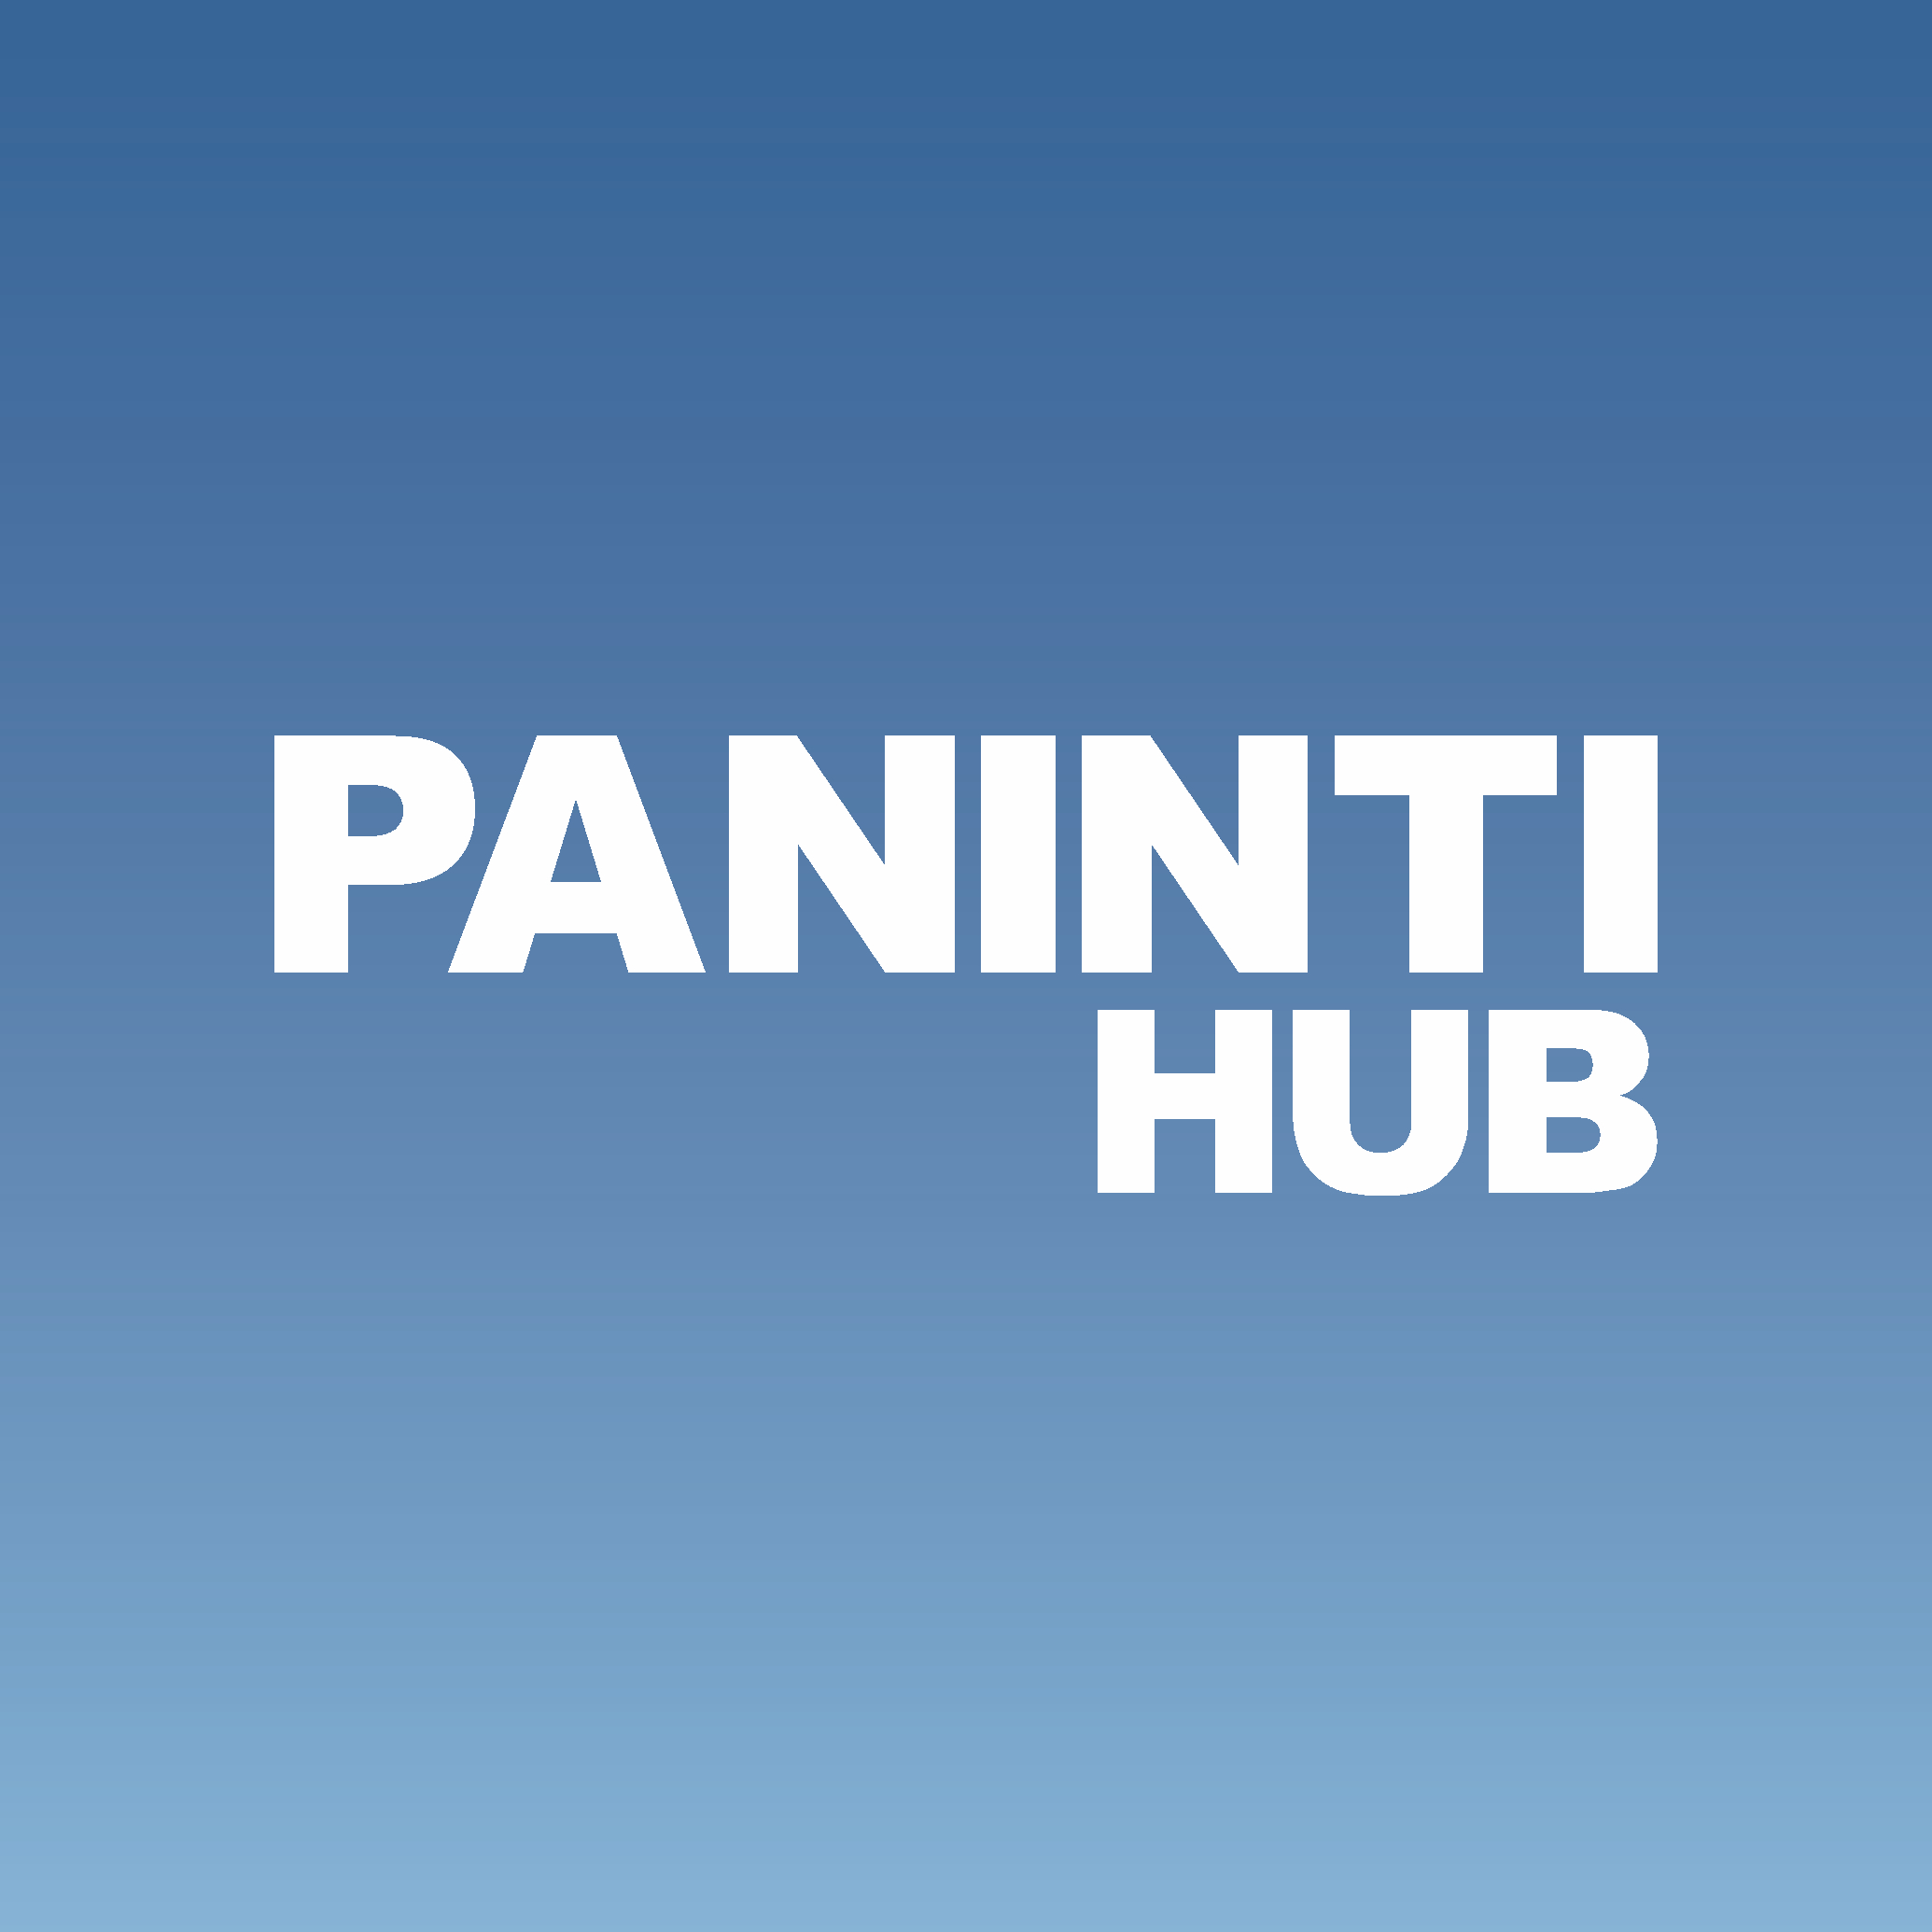 PANINTI Hub Official Store